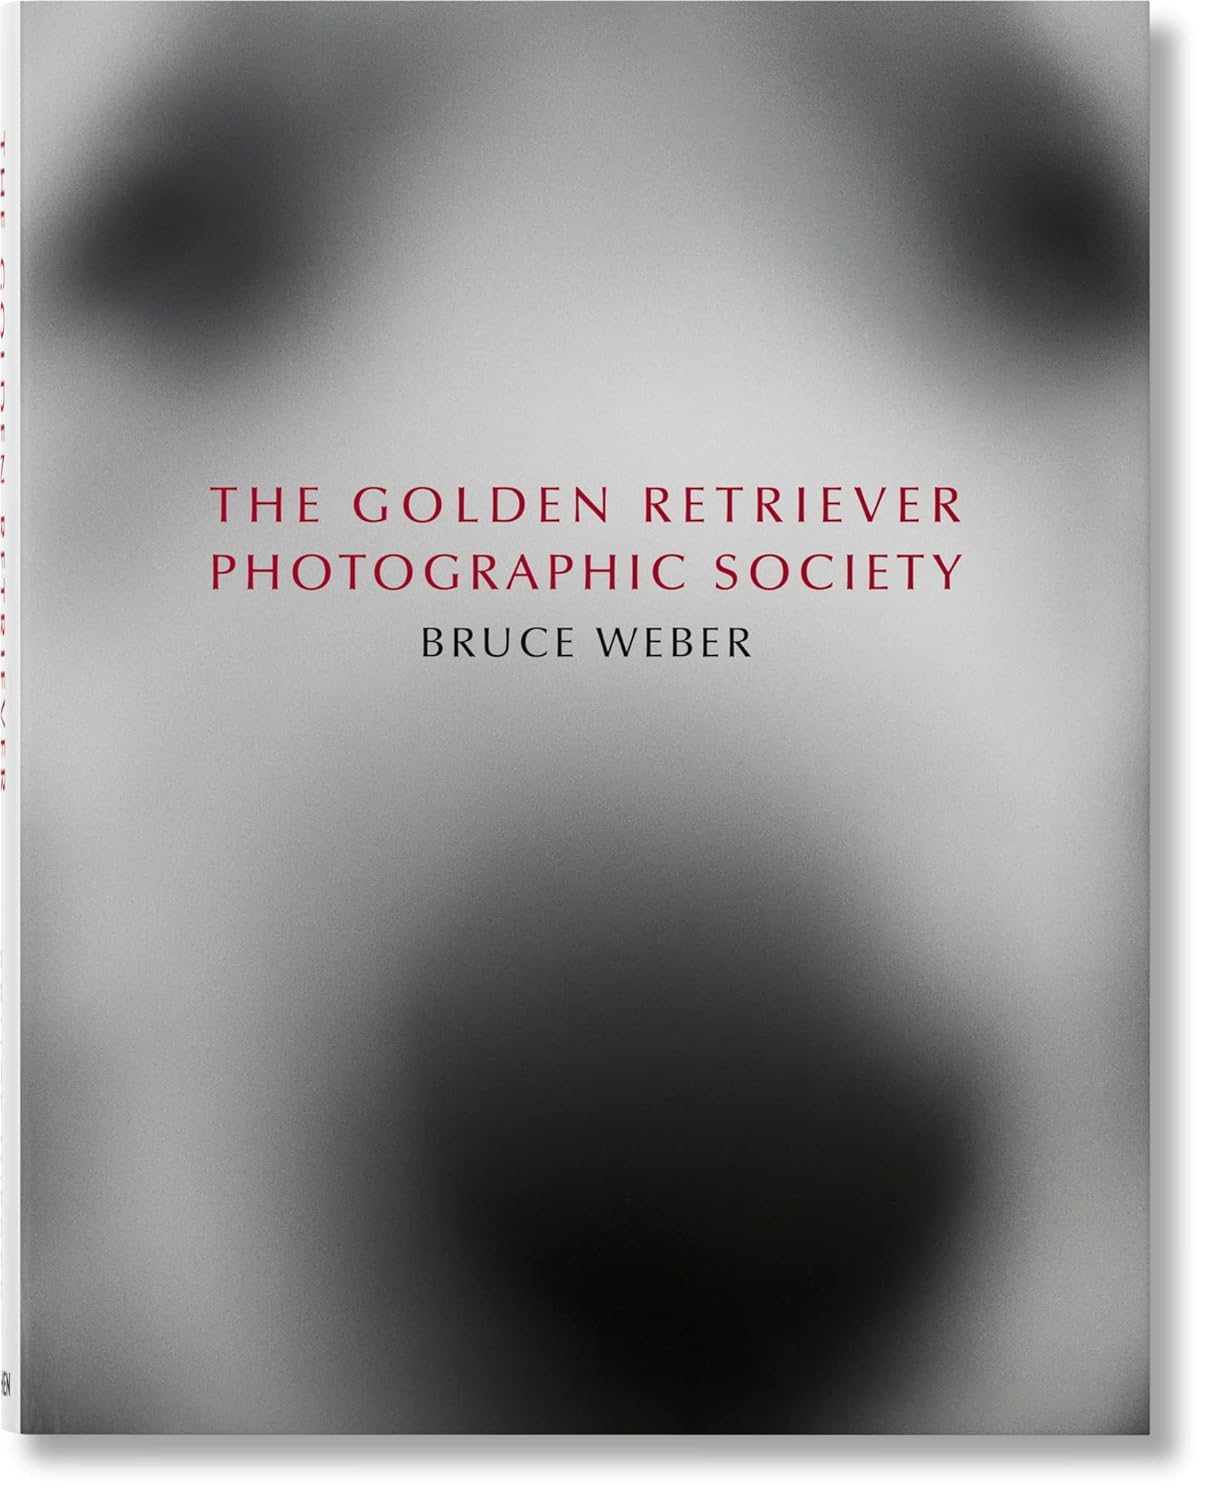 Bruce Weber: The Golden Retriever Photographic Society